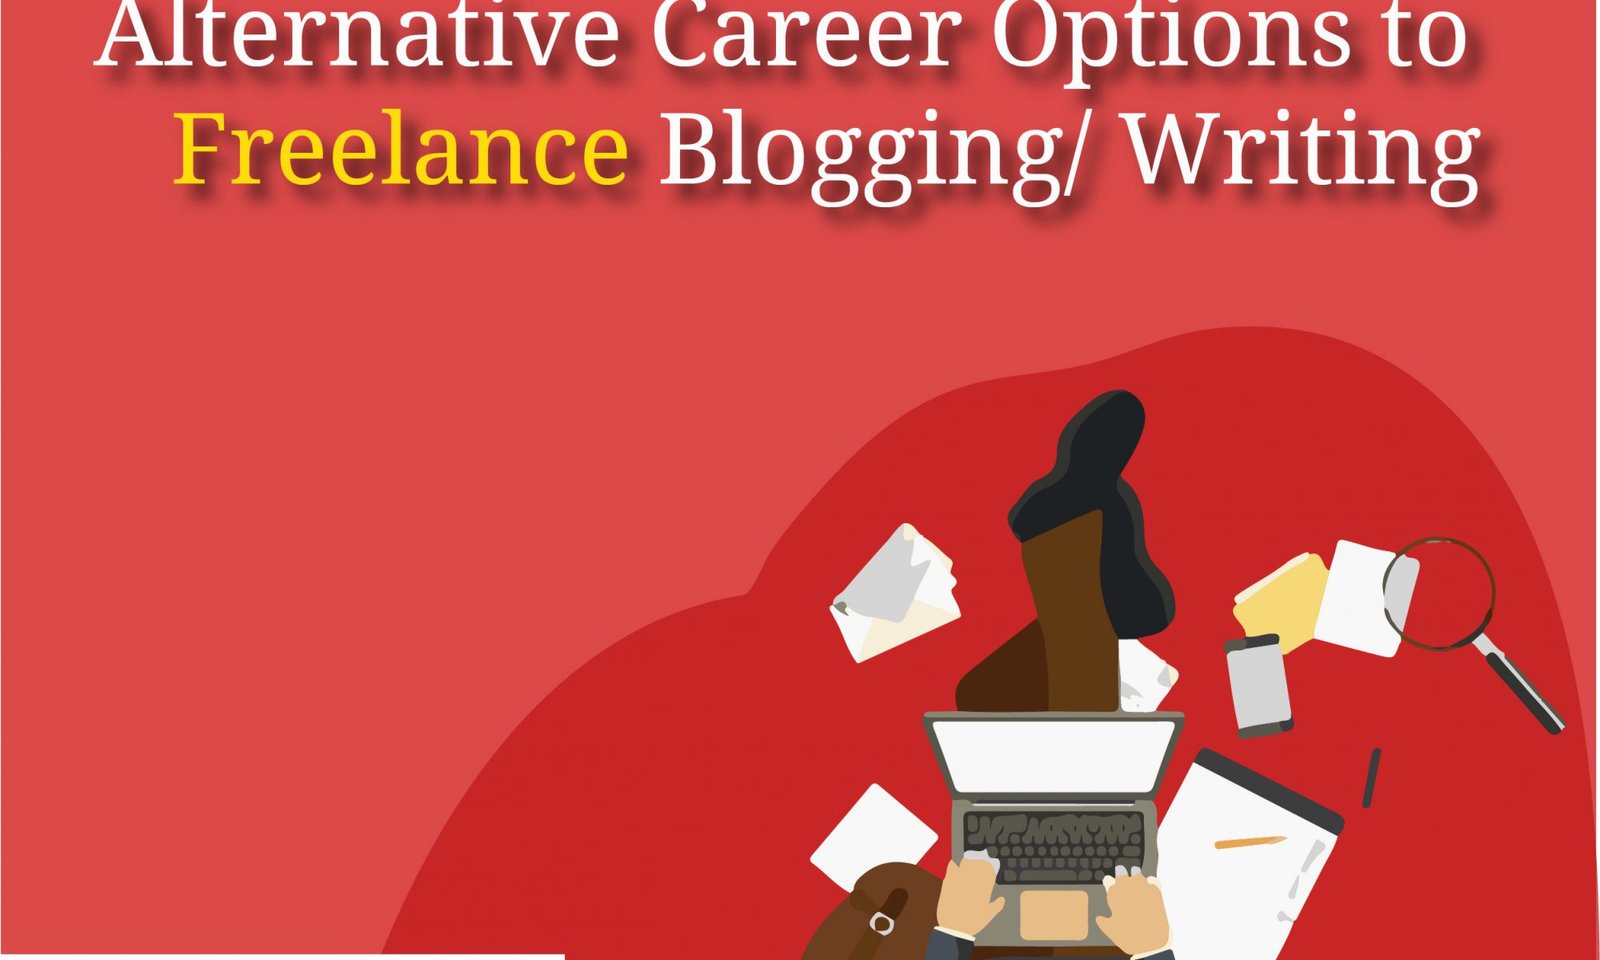 Alternative Career Option to Freelance Blogging/ Writing